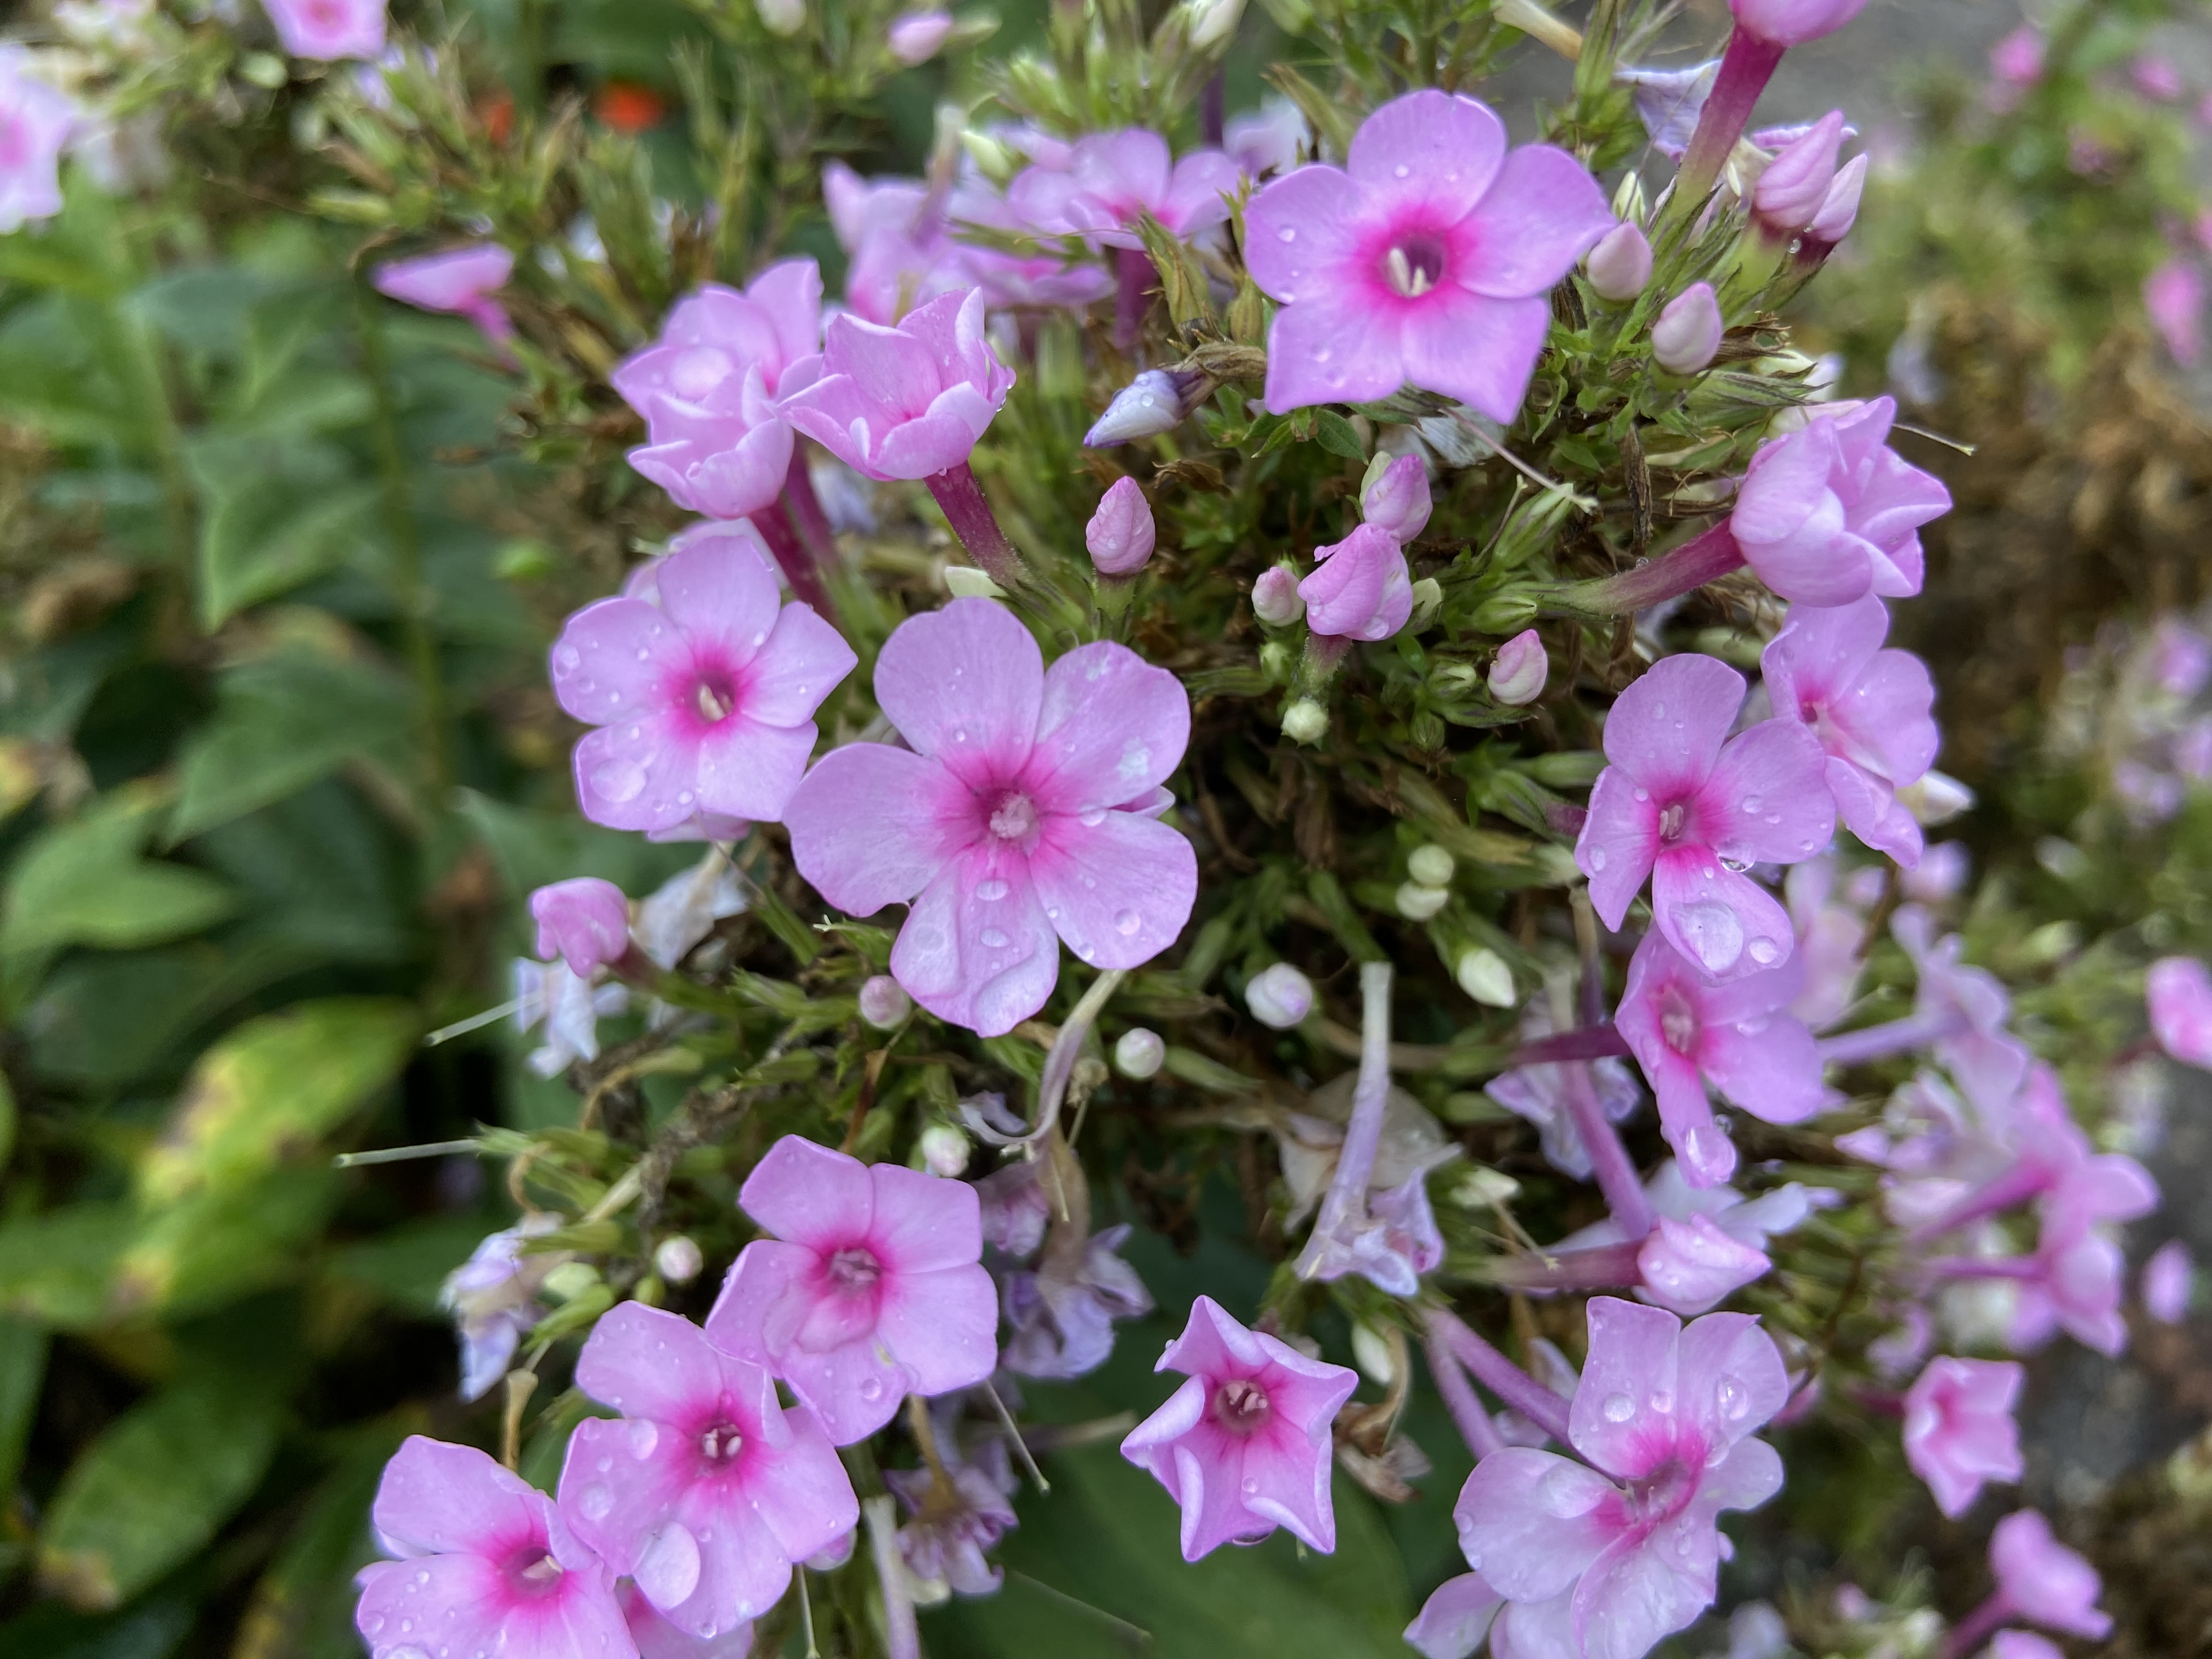 Phlox paniculata 'Balkaposin' - Ka-Pow Soft Pink garden phlox